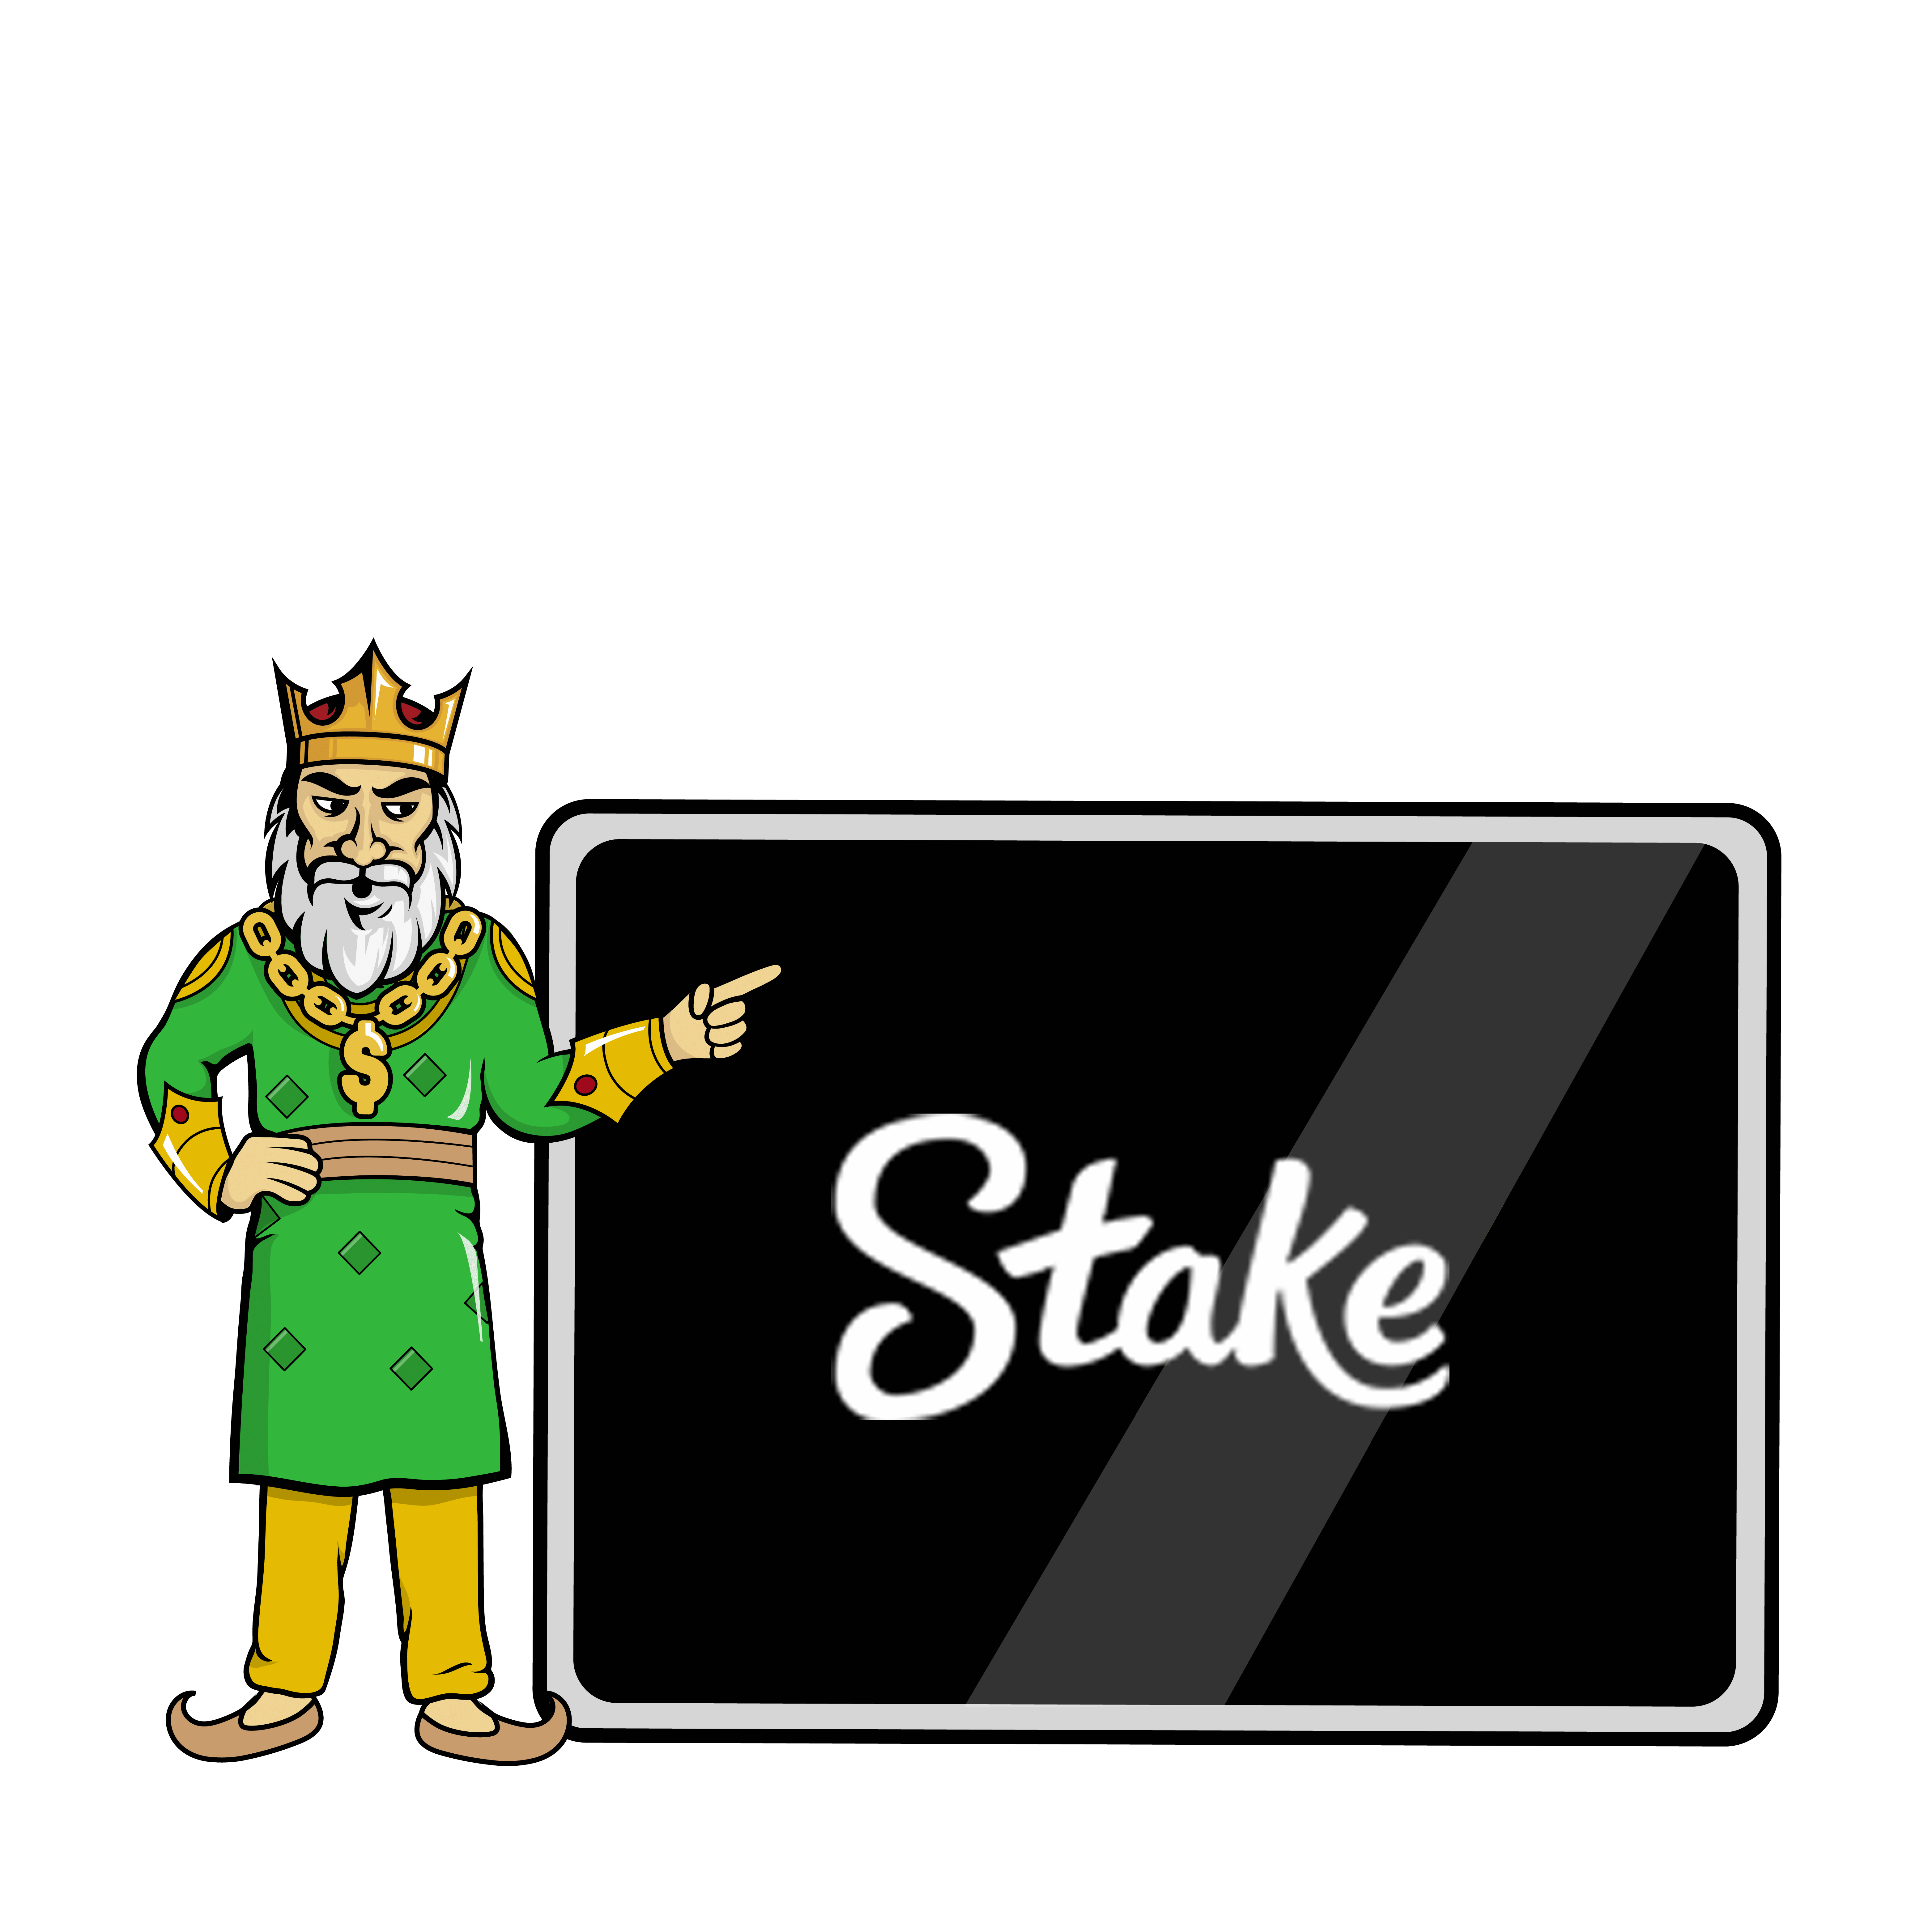 Stake logo with betting Raja